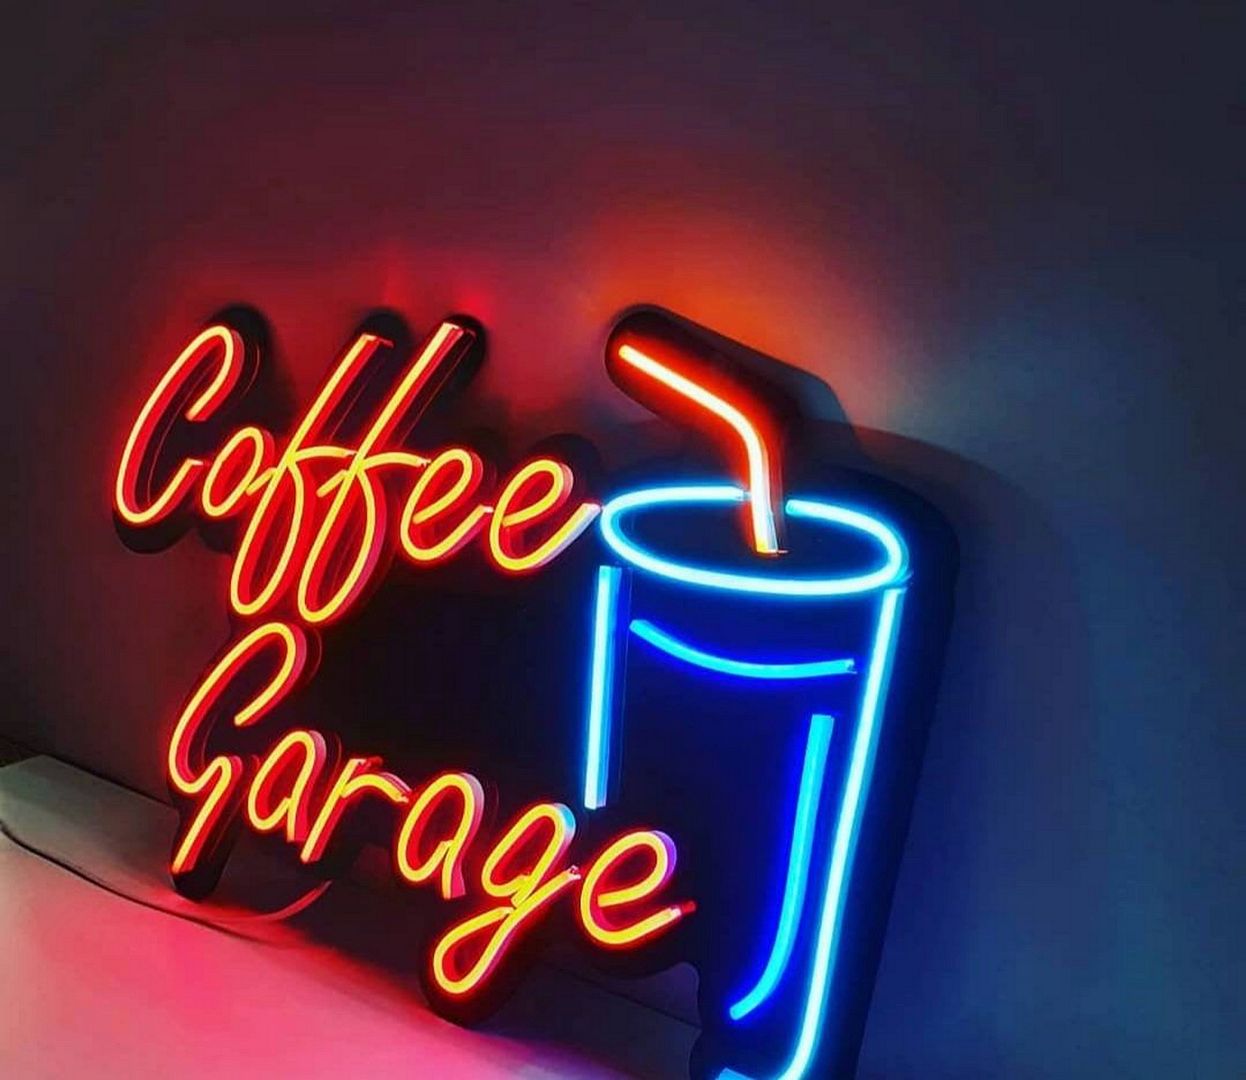 Coffee Garage Neon Sign